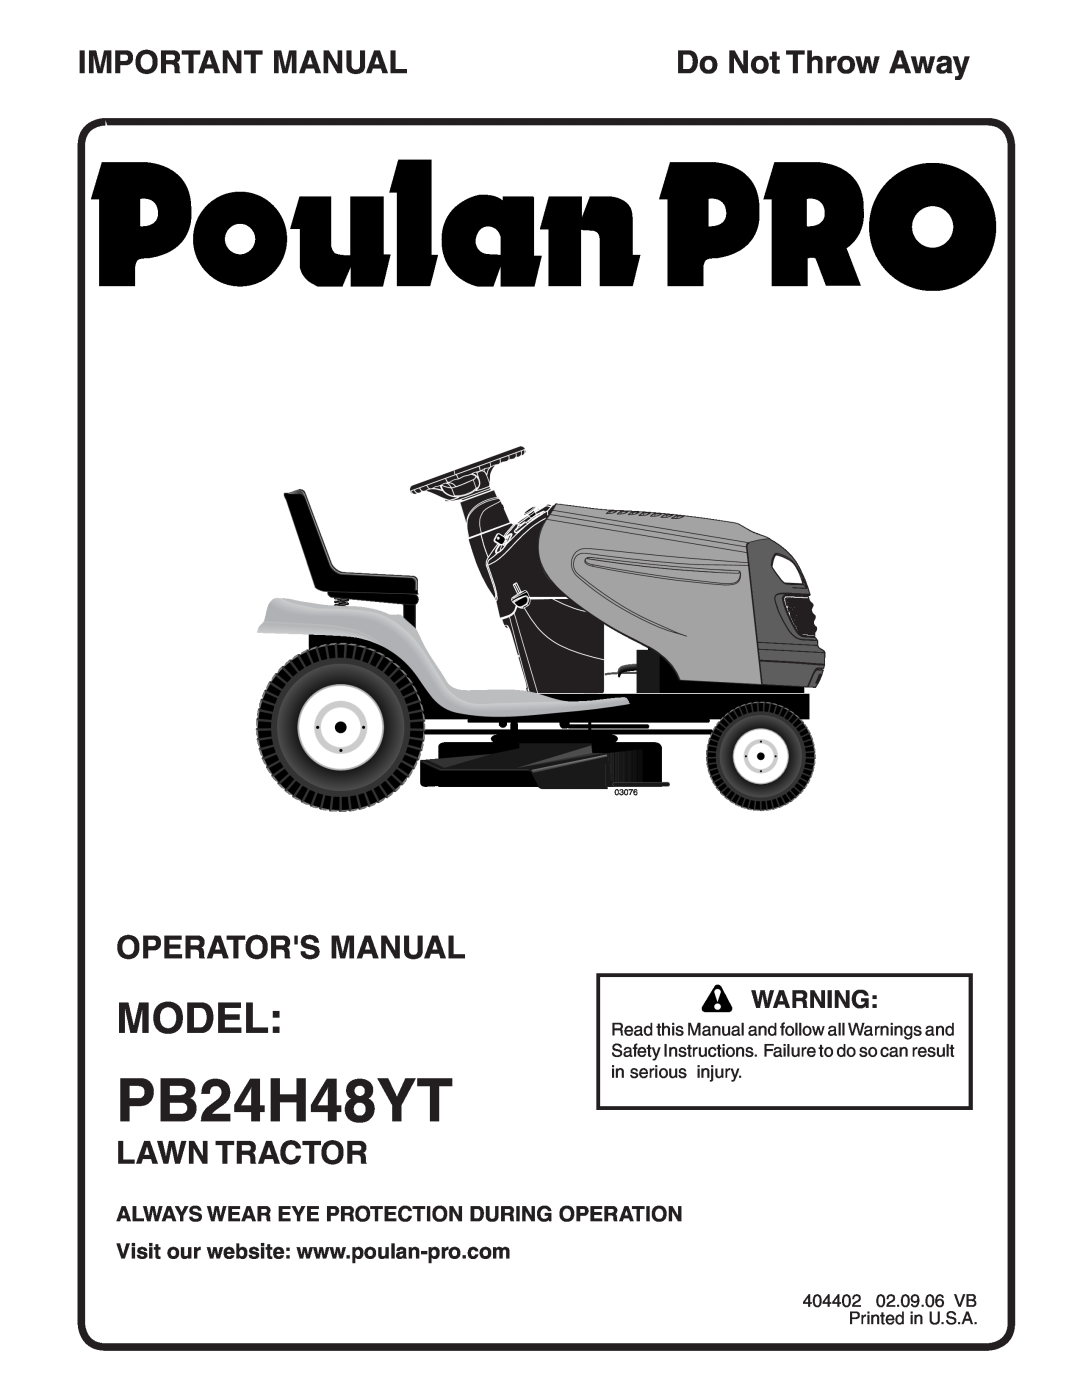 Poulan 960420022 manual Model, Important Manual, Operators Manual, Lawn Tractor, PB24H48YT, Do Not Throw Away, 03076 